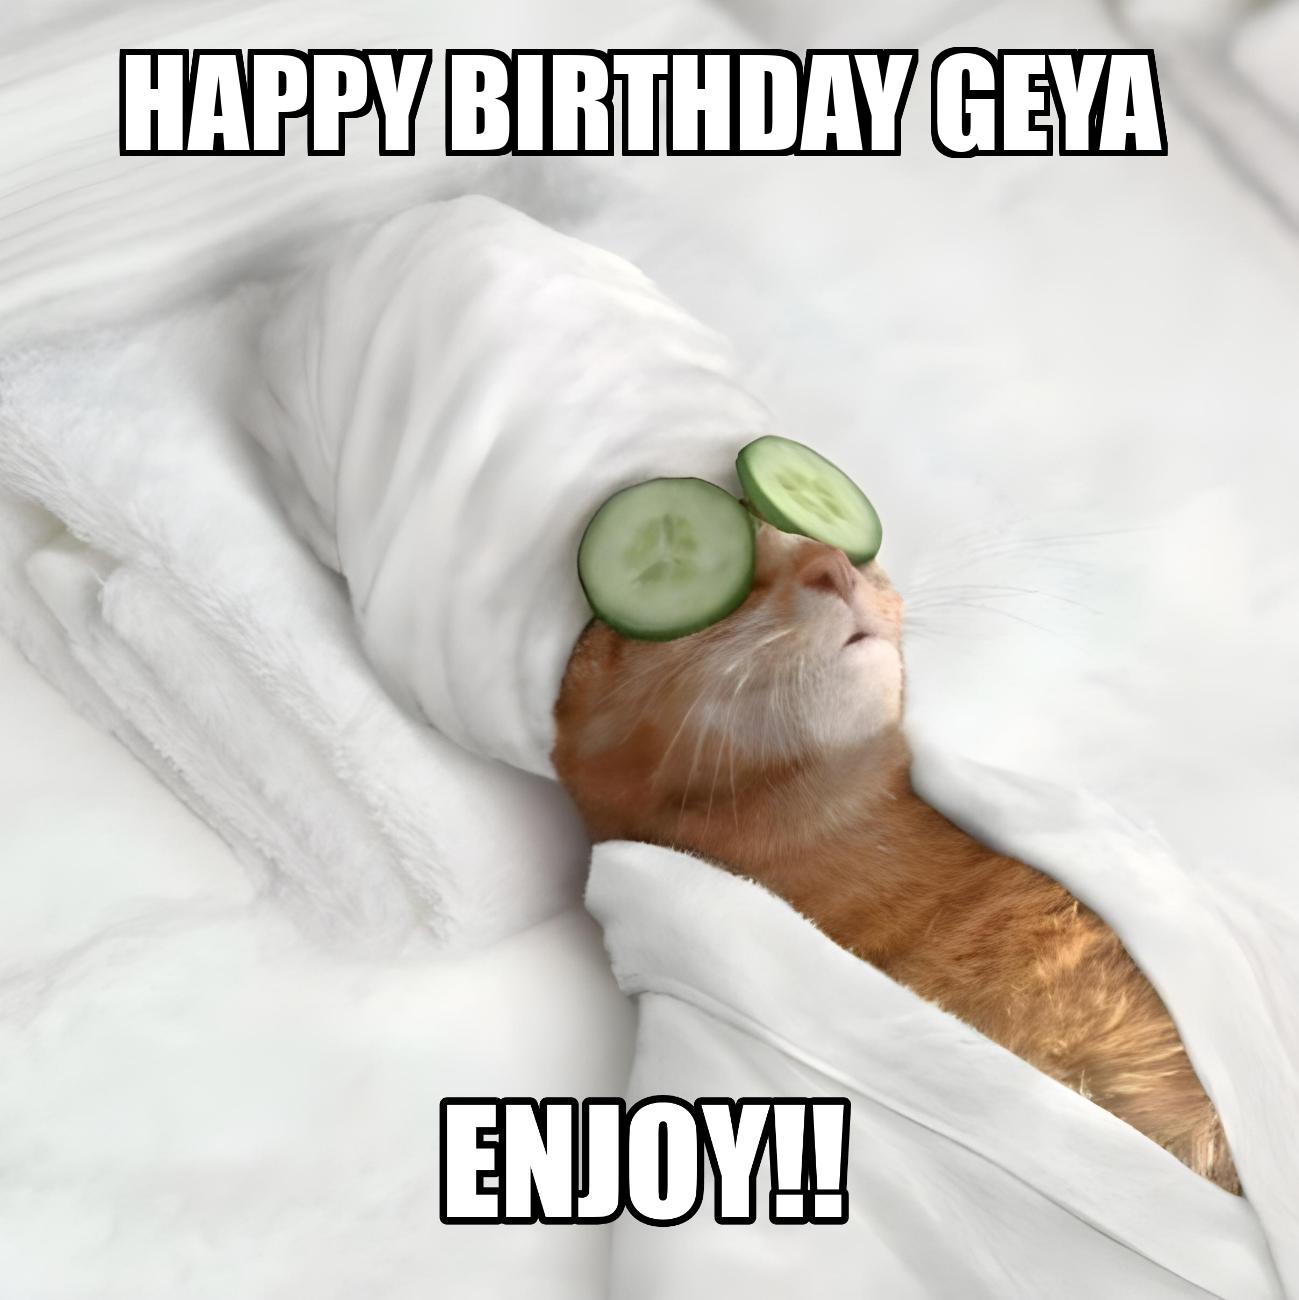 Happy Birthday Geya Enjoy Cat Meme